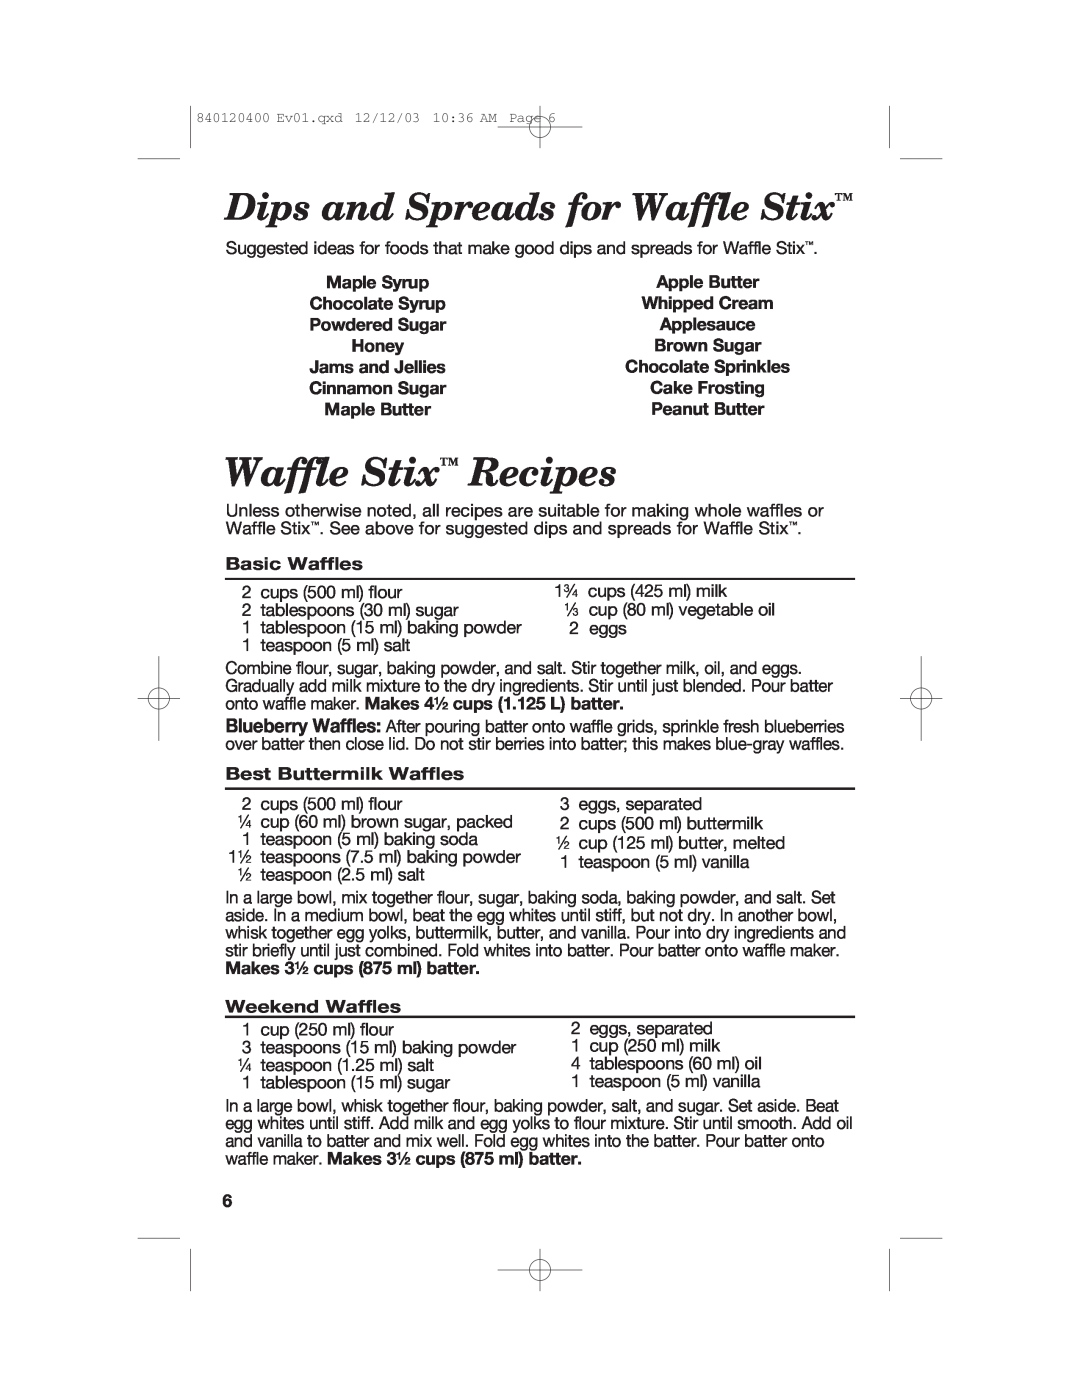 Hamilton Beach 26291 manual Waffle Stix Recipes, Dips and Spreads for Waffle Stix, Cake Frosting, Basic Waffles 